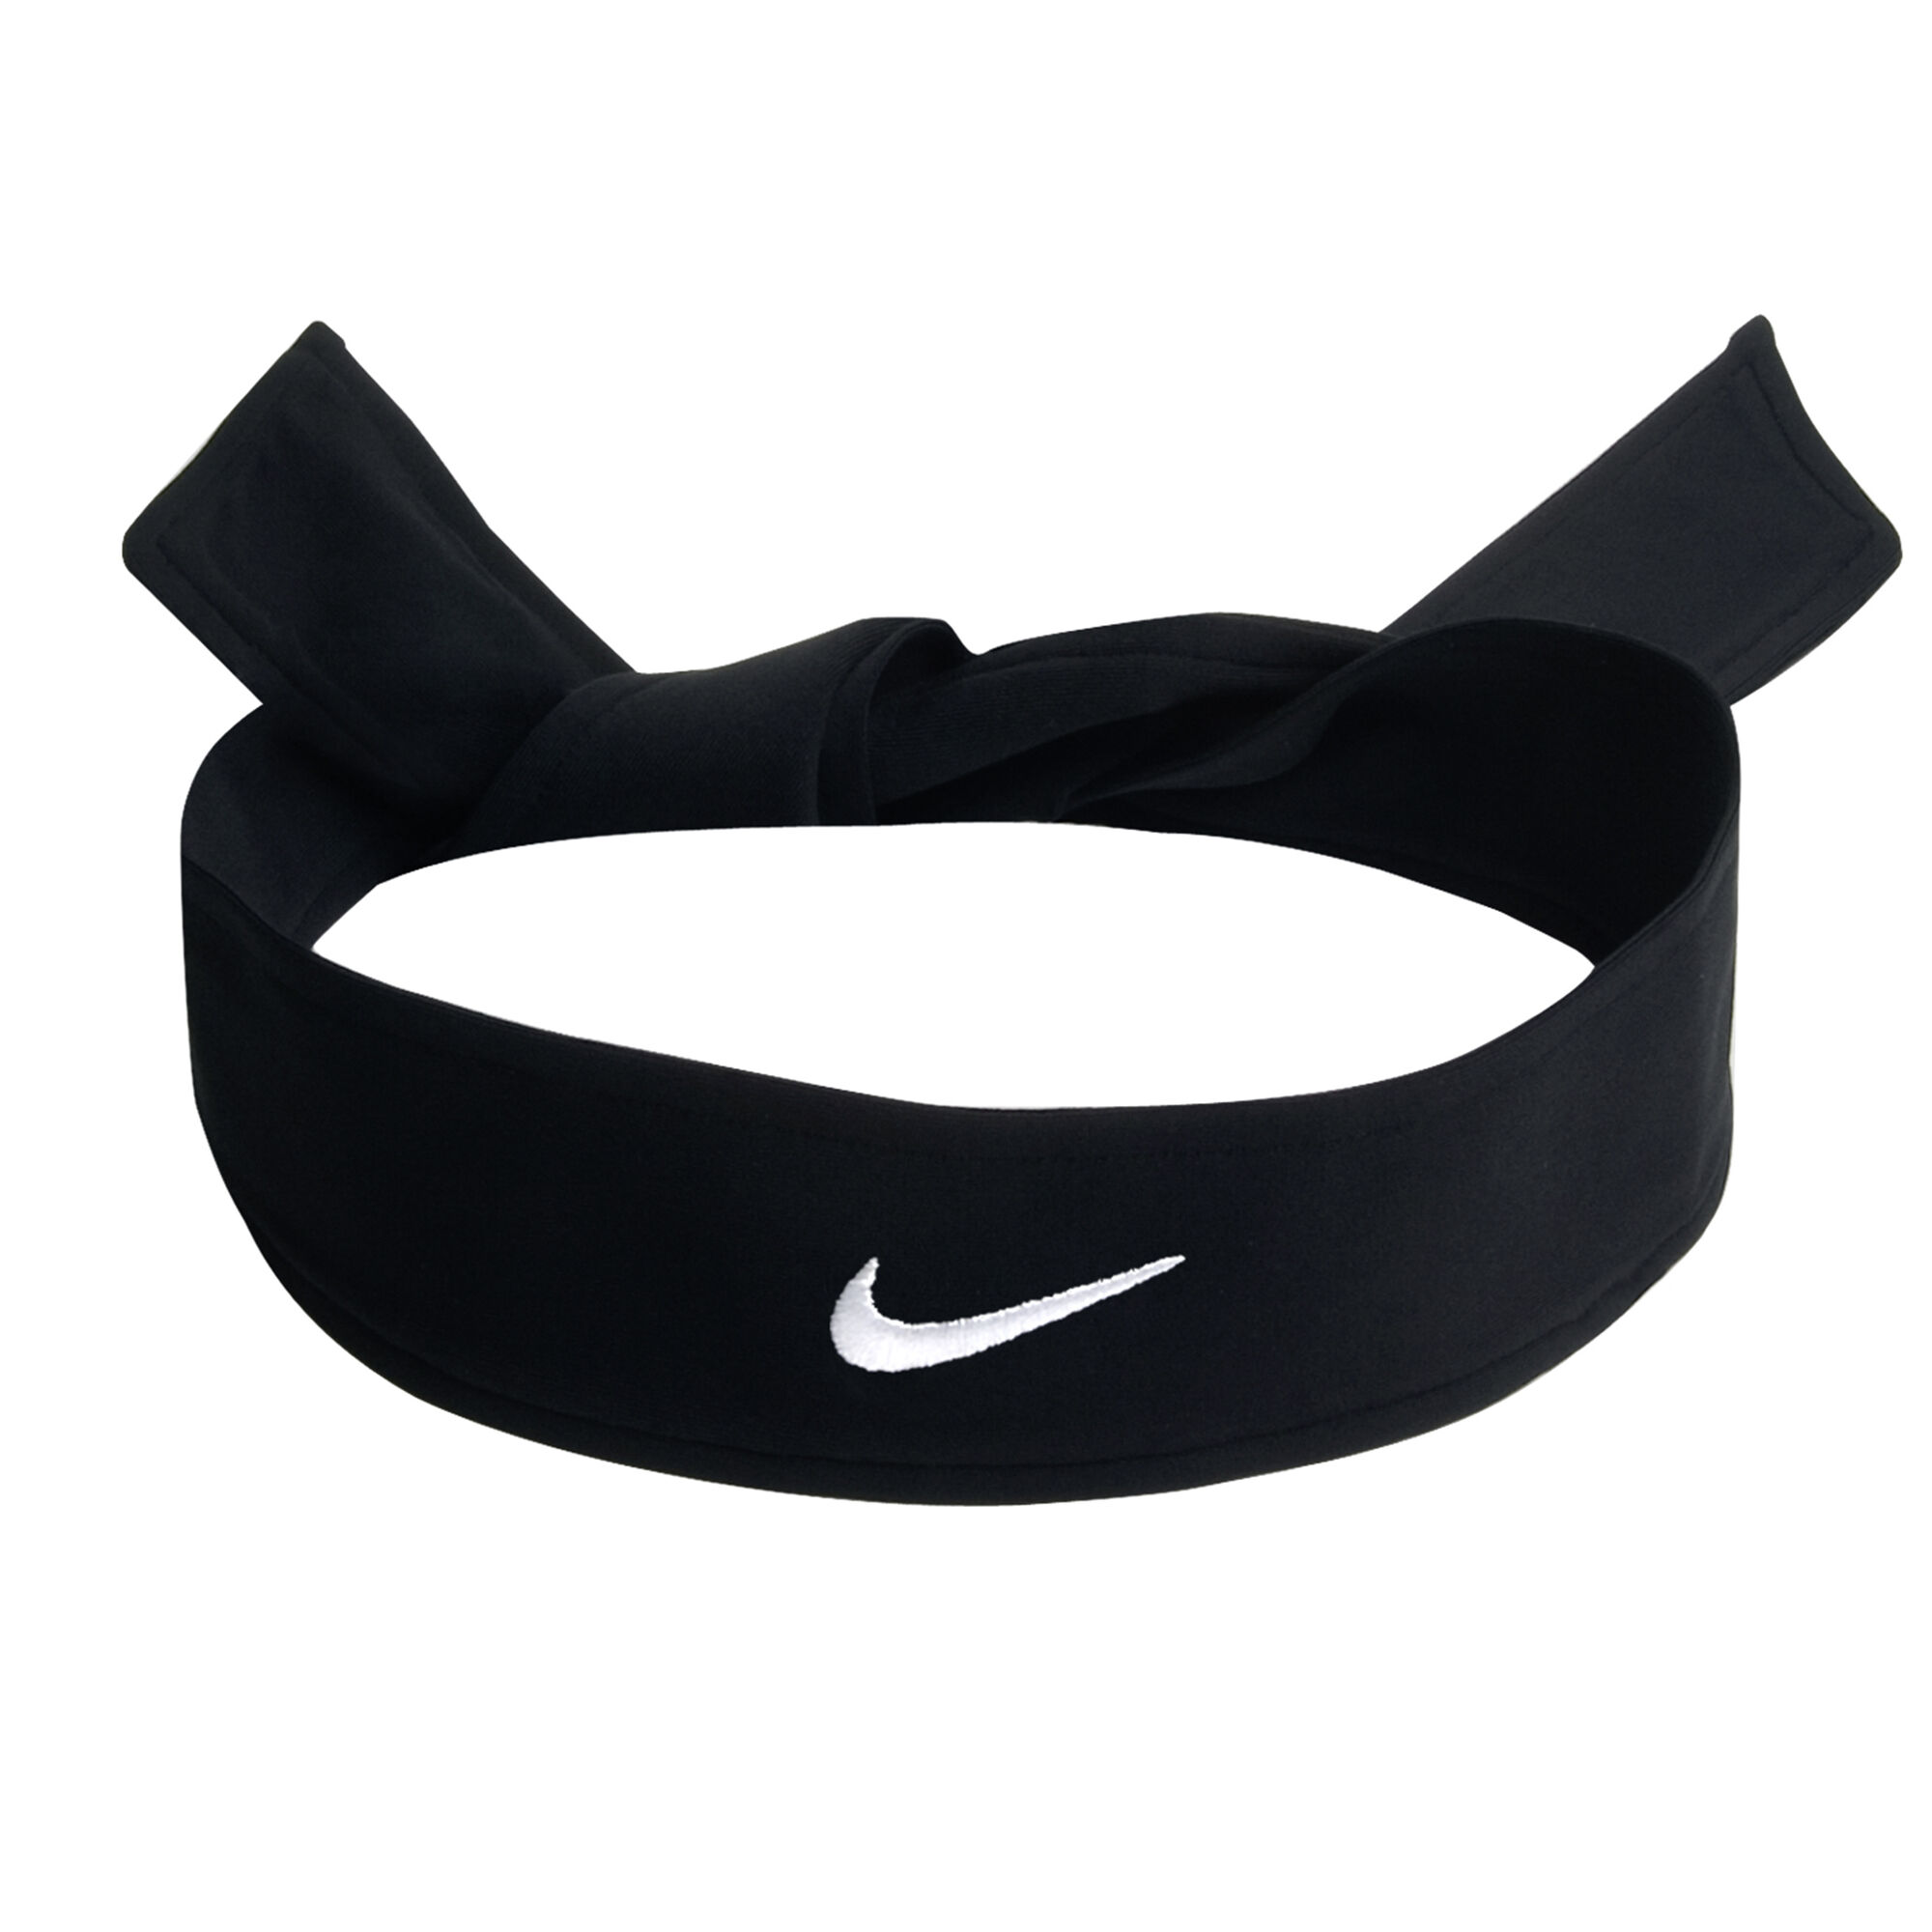 Buy Nike Dri-Fit Bandana Black, White online | Tennis Point UK